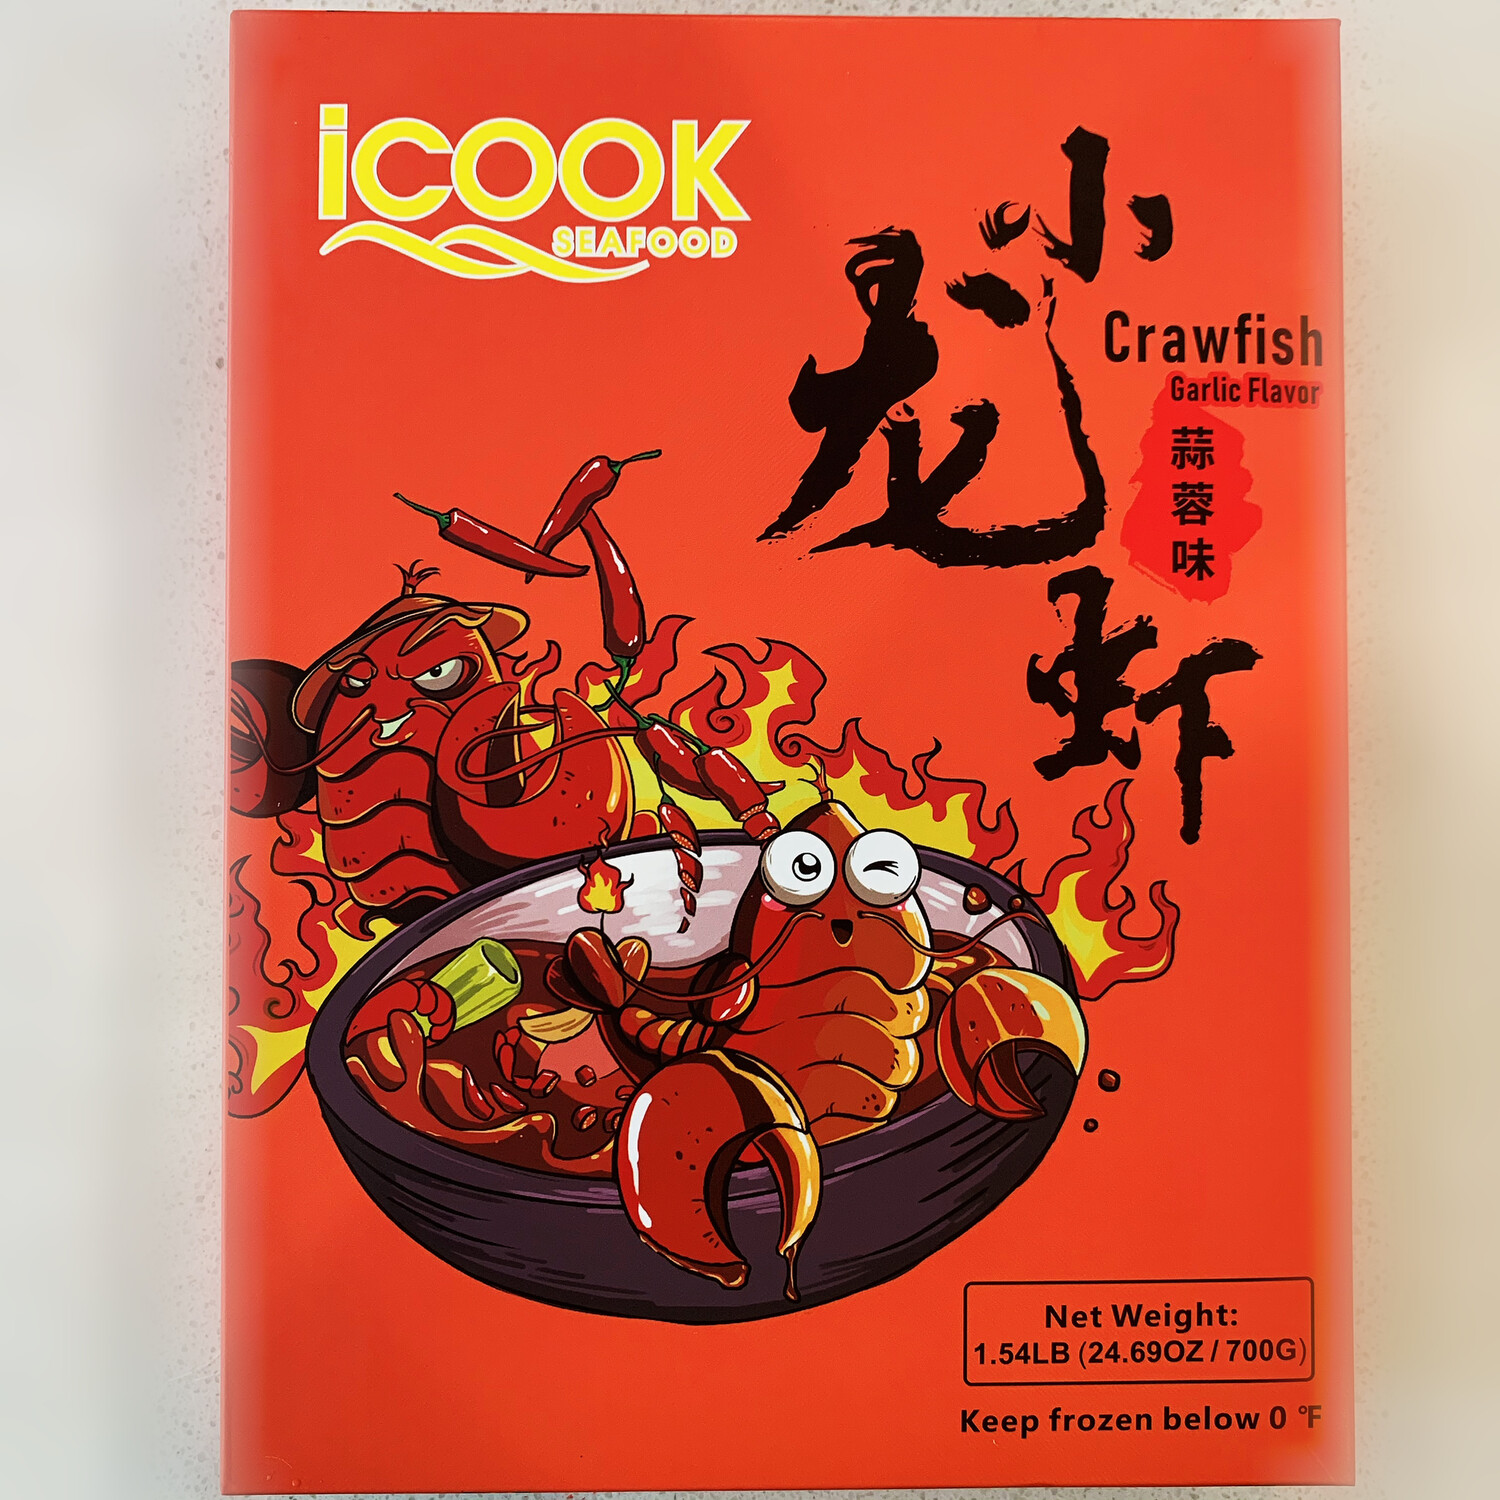 iCook Crawfish Garlic Flavor 24.69oz 即食小龙虾-蒜蓉味